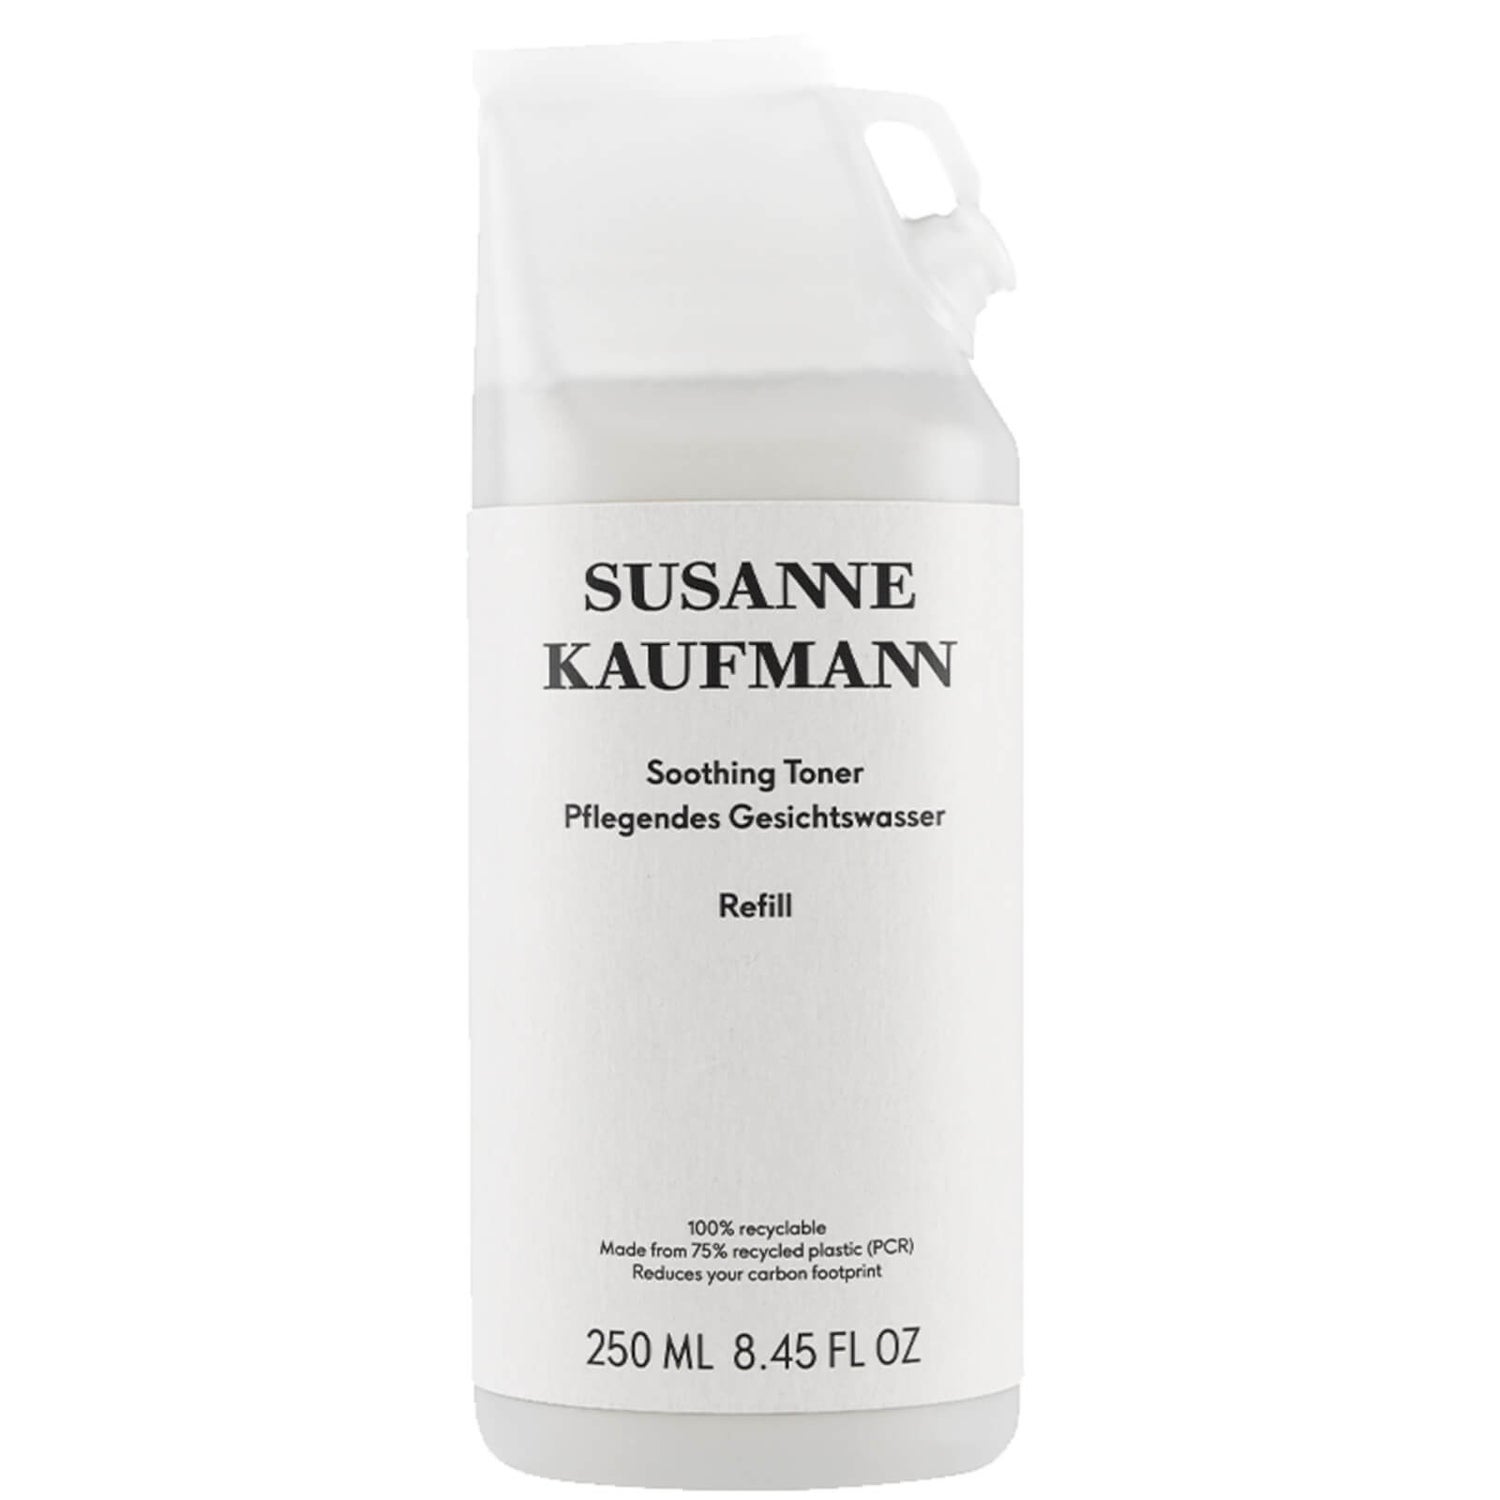 Susanne Kaufmann Soothing Toner Refill 250ml